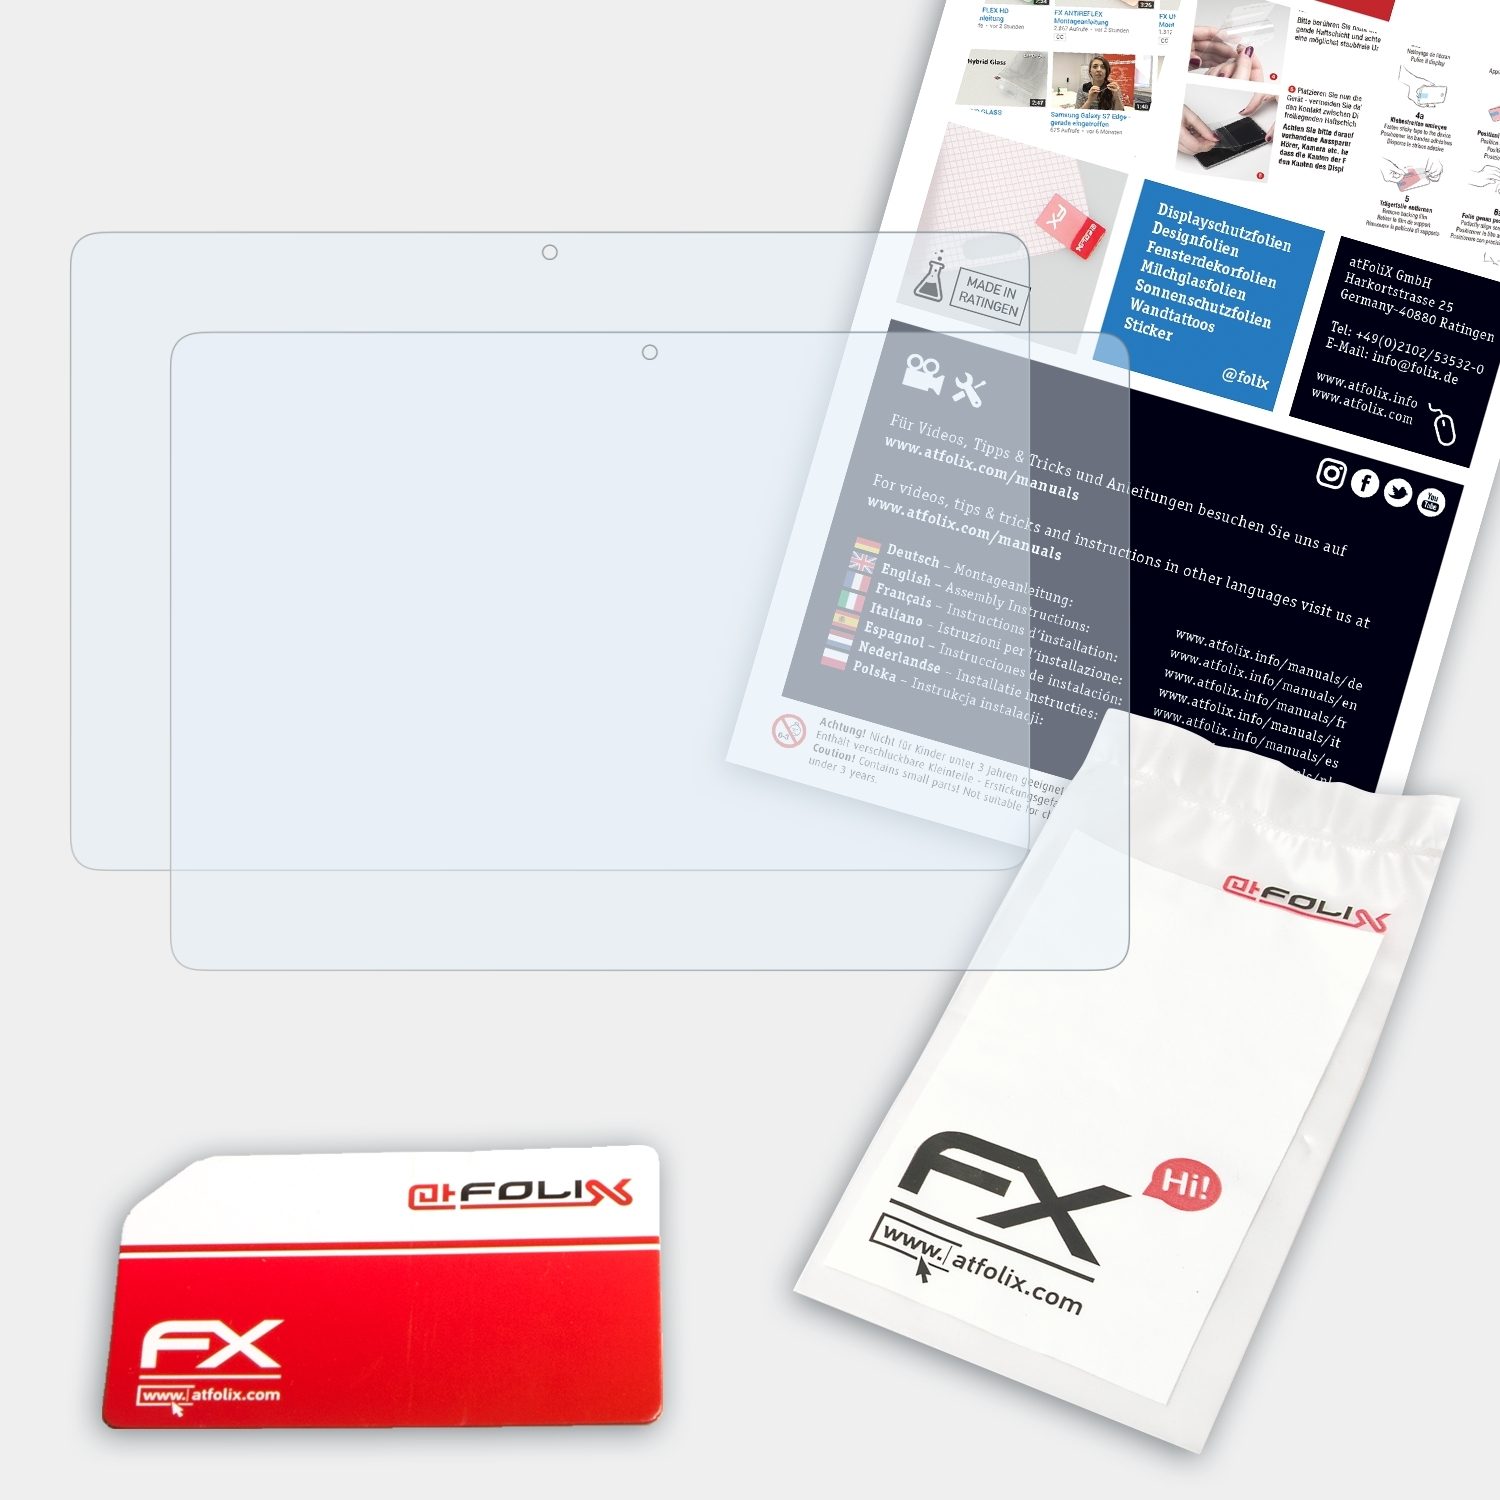 ATFOLIX Huawei 10) MediaPad FX-Clear Displayschutz(für T5 2x